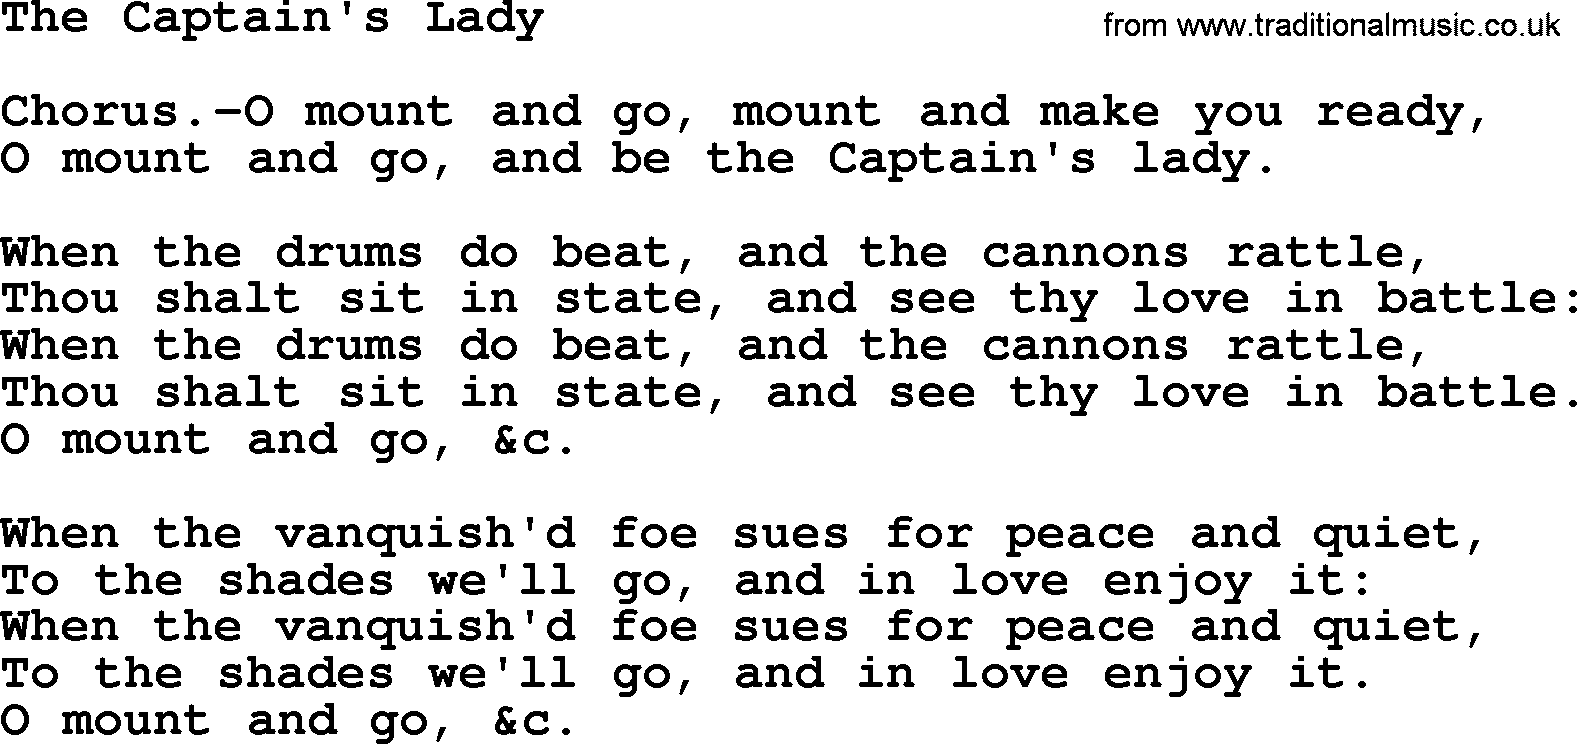 Robert Burns Songs & Lyrics: The Captain's Lady